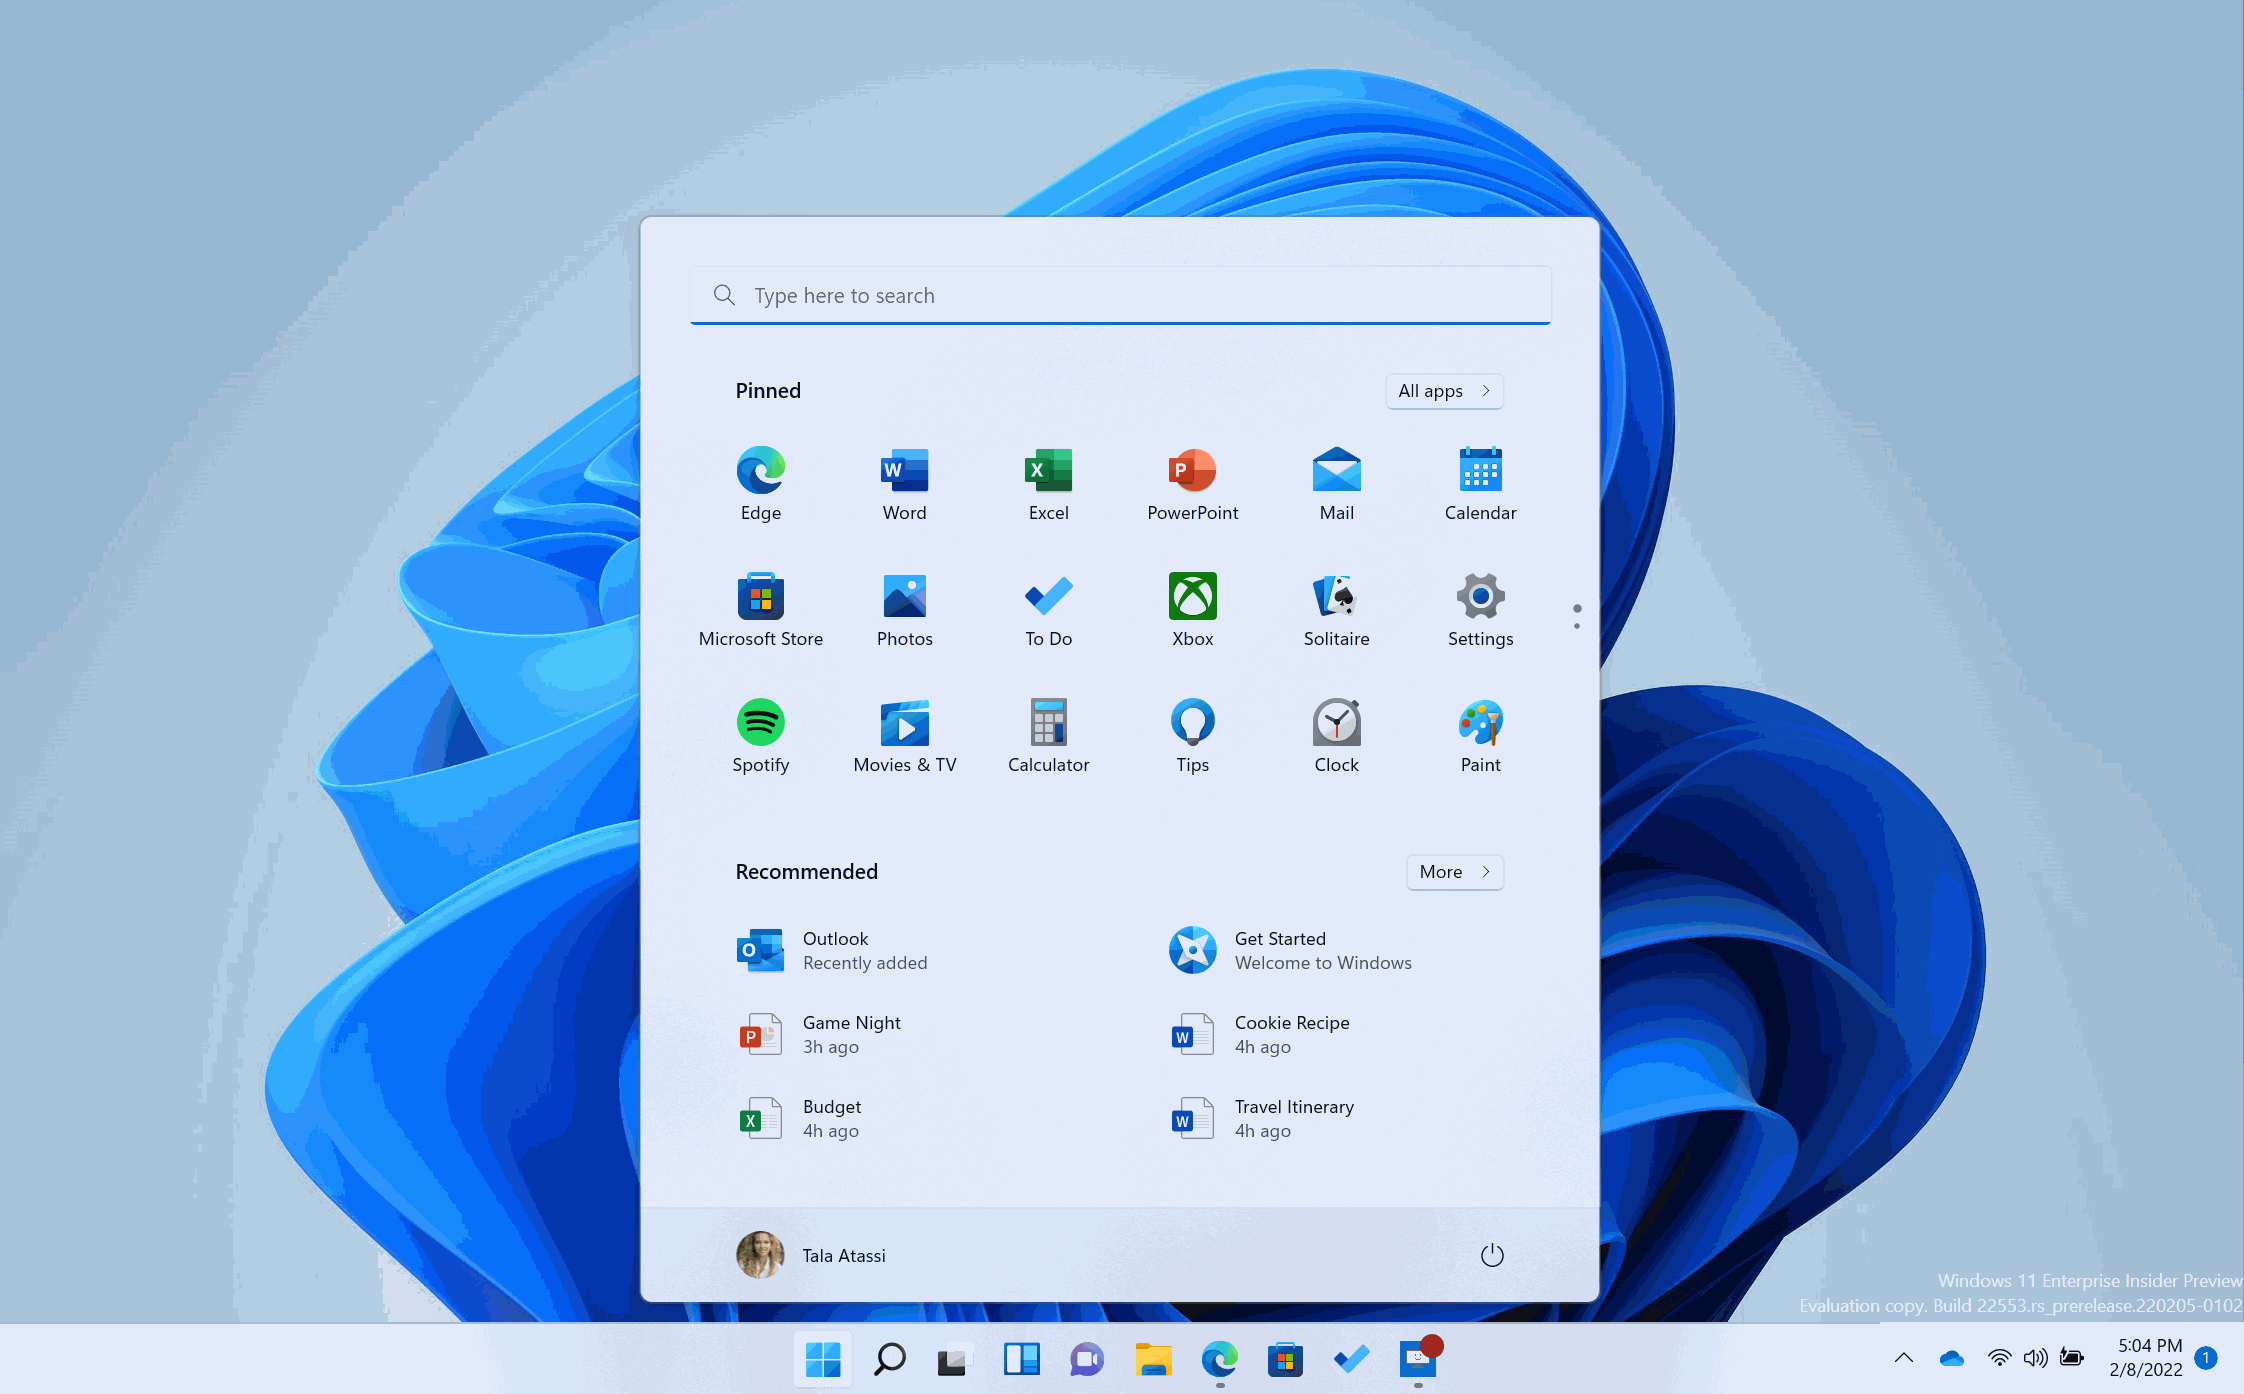 Windows 11 universal search